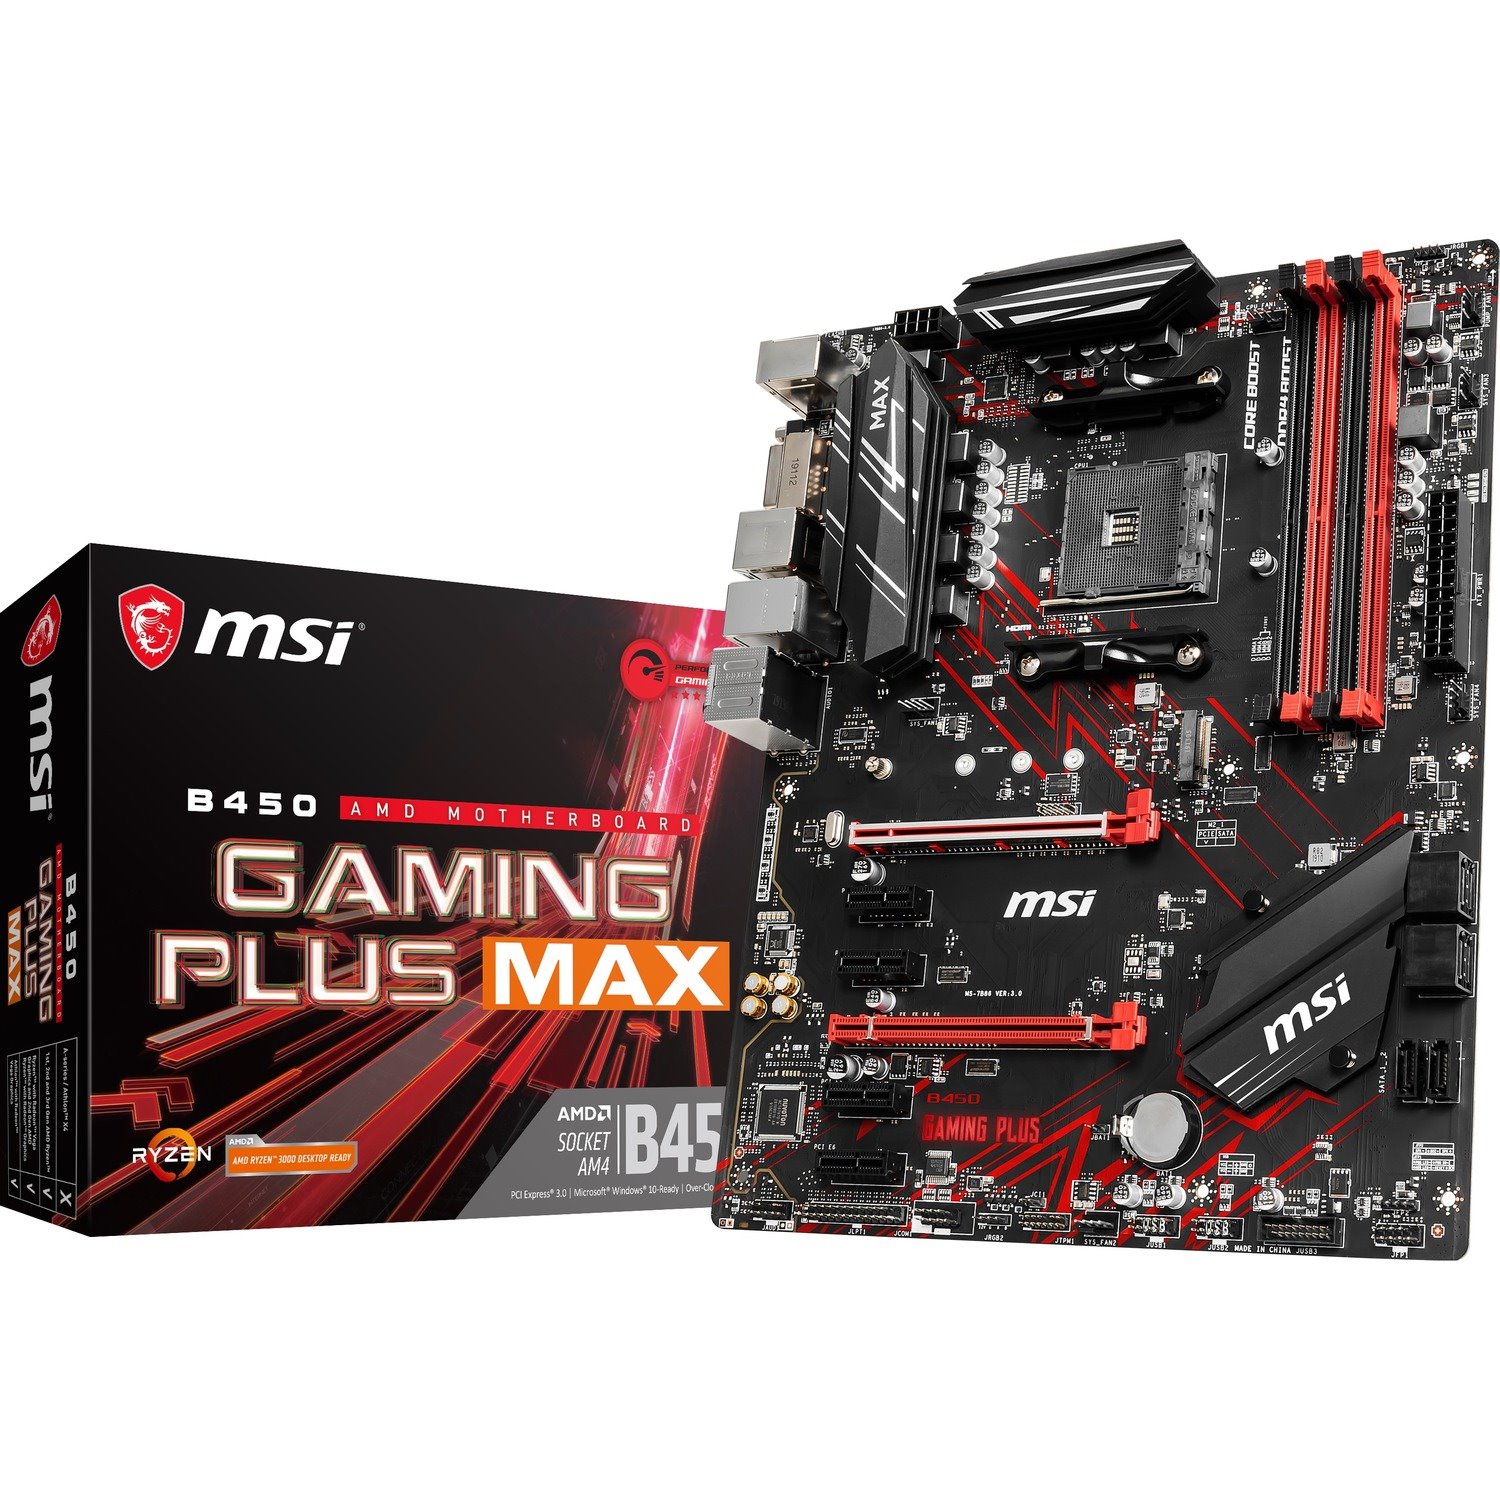 MSI B450 GAMING PLUS MAX Desktop Motherboard - AMD B450 Chipset - Socket AM4 - ATX